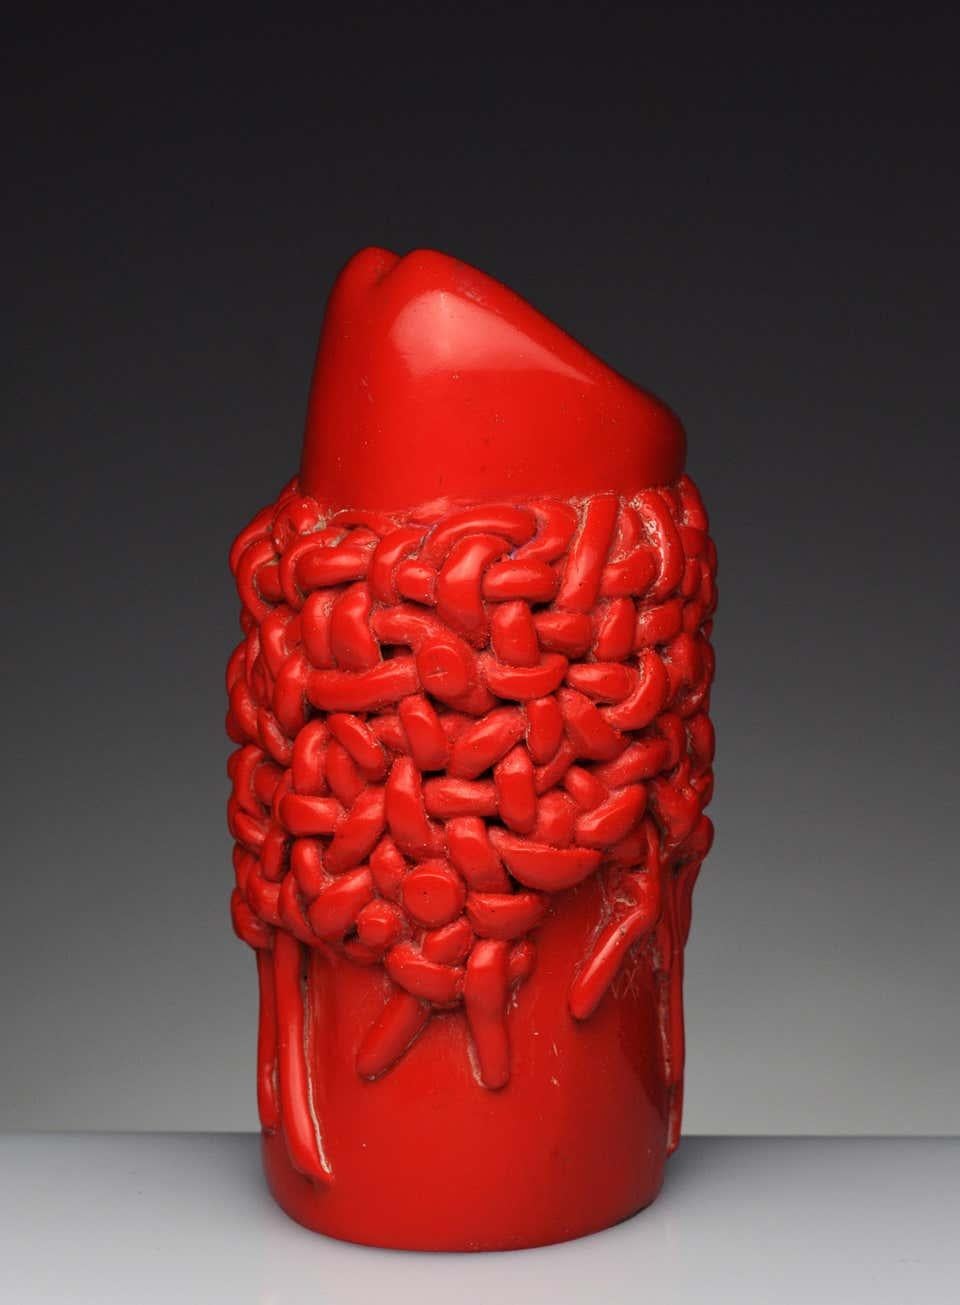 Raul Valdivieso Latin American Ceramic Sculpture 2